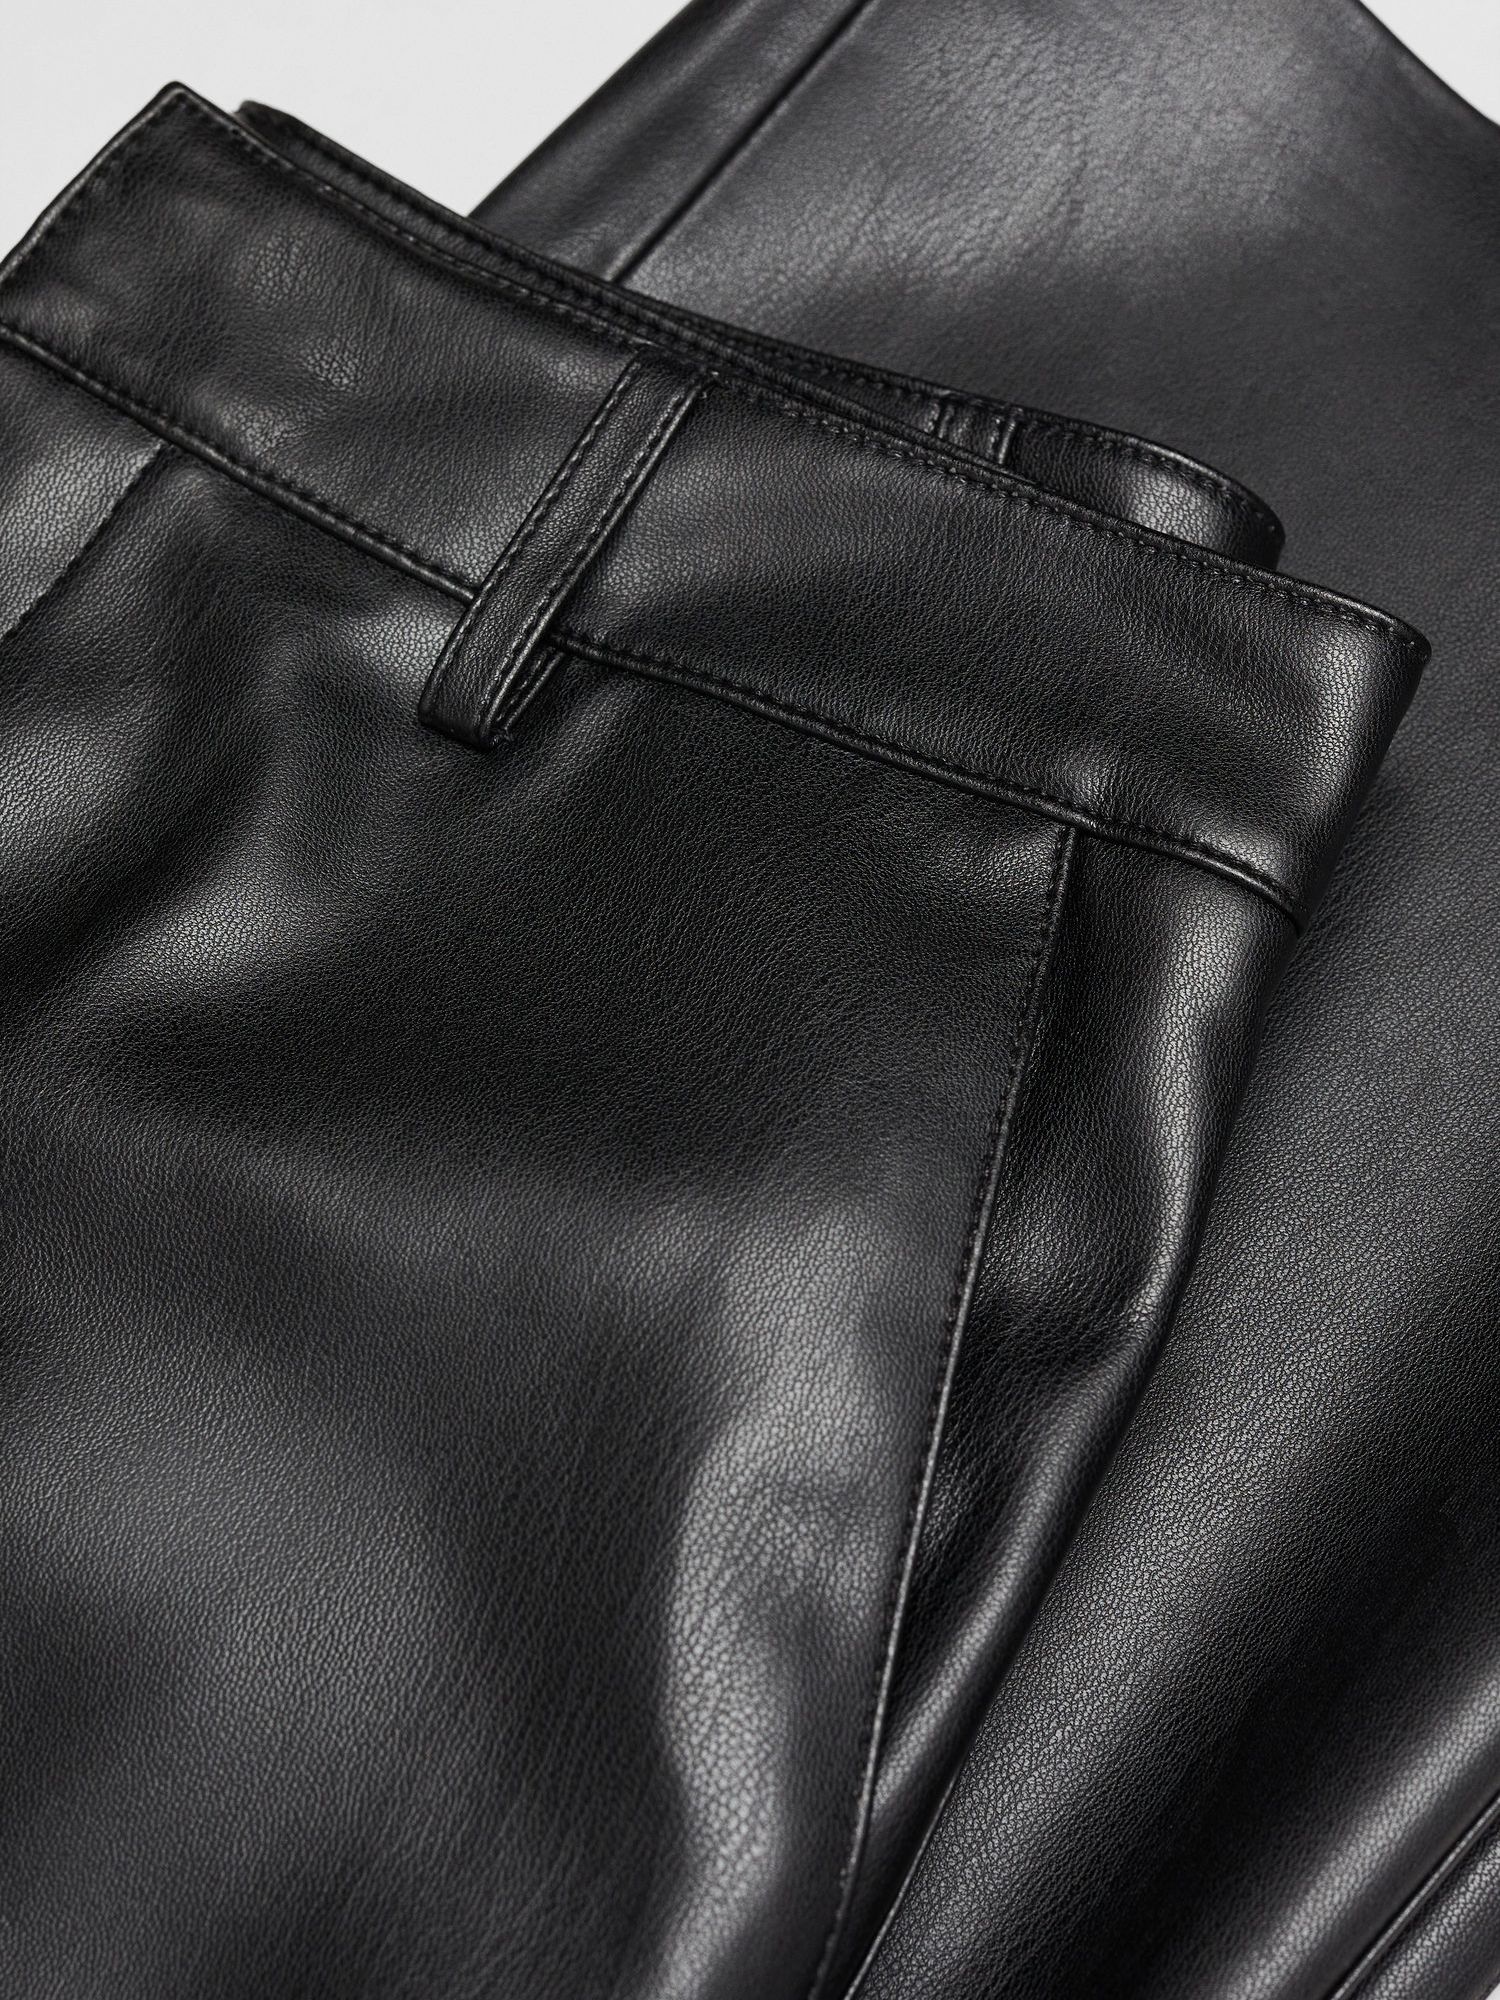 Mango Mali Faux Leather High Waist Trousers, Black, 8